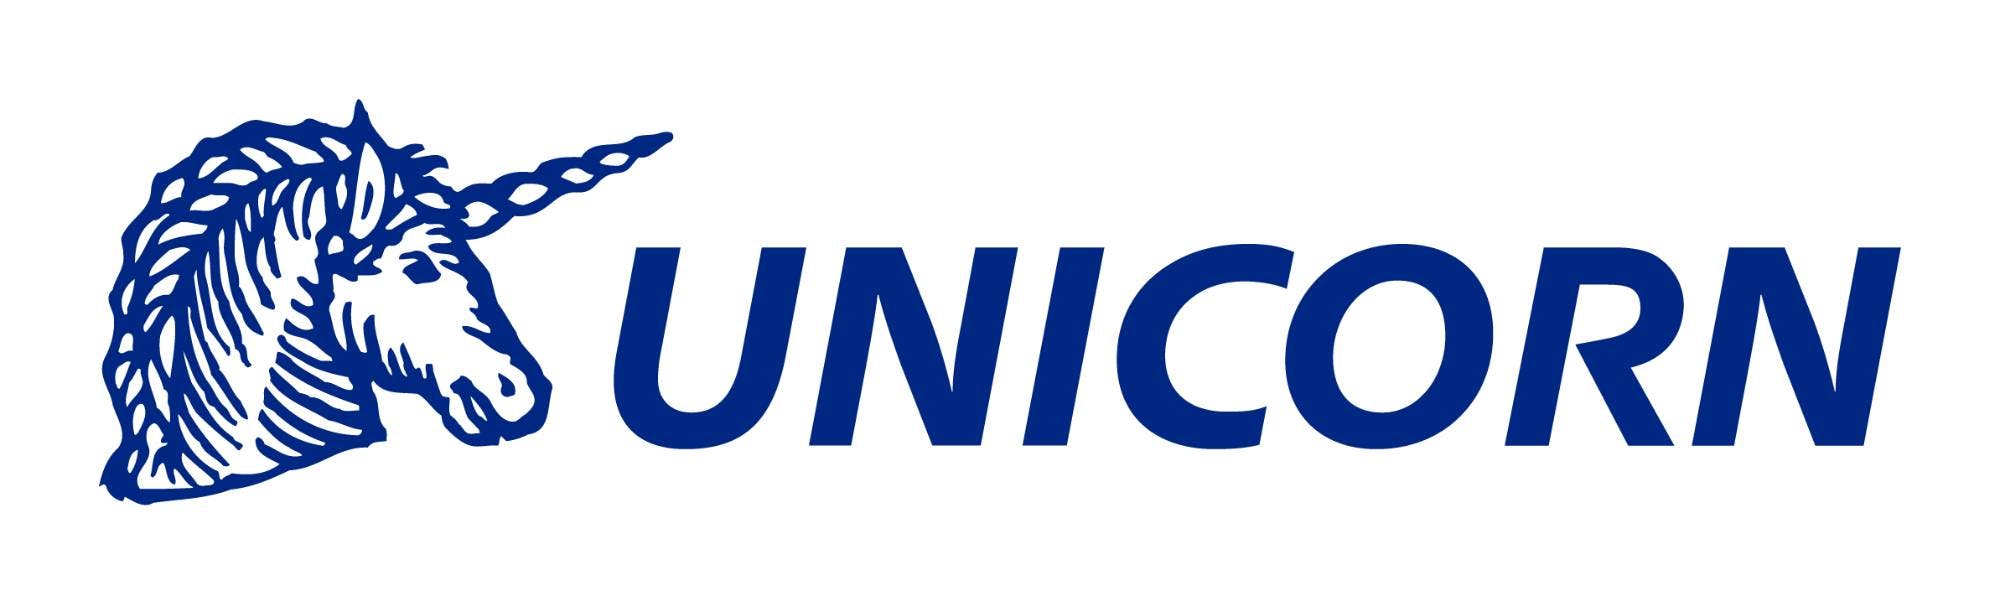 Unicorn Systems logo